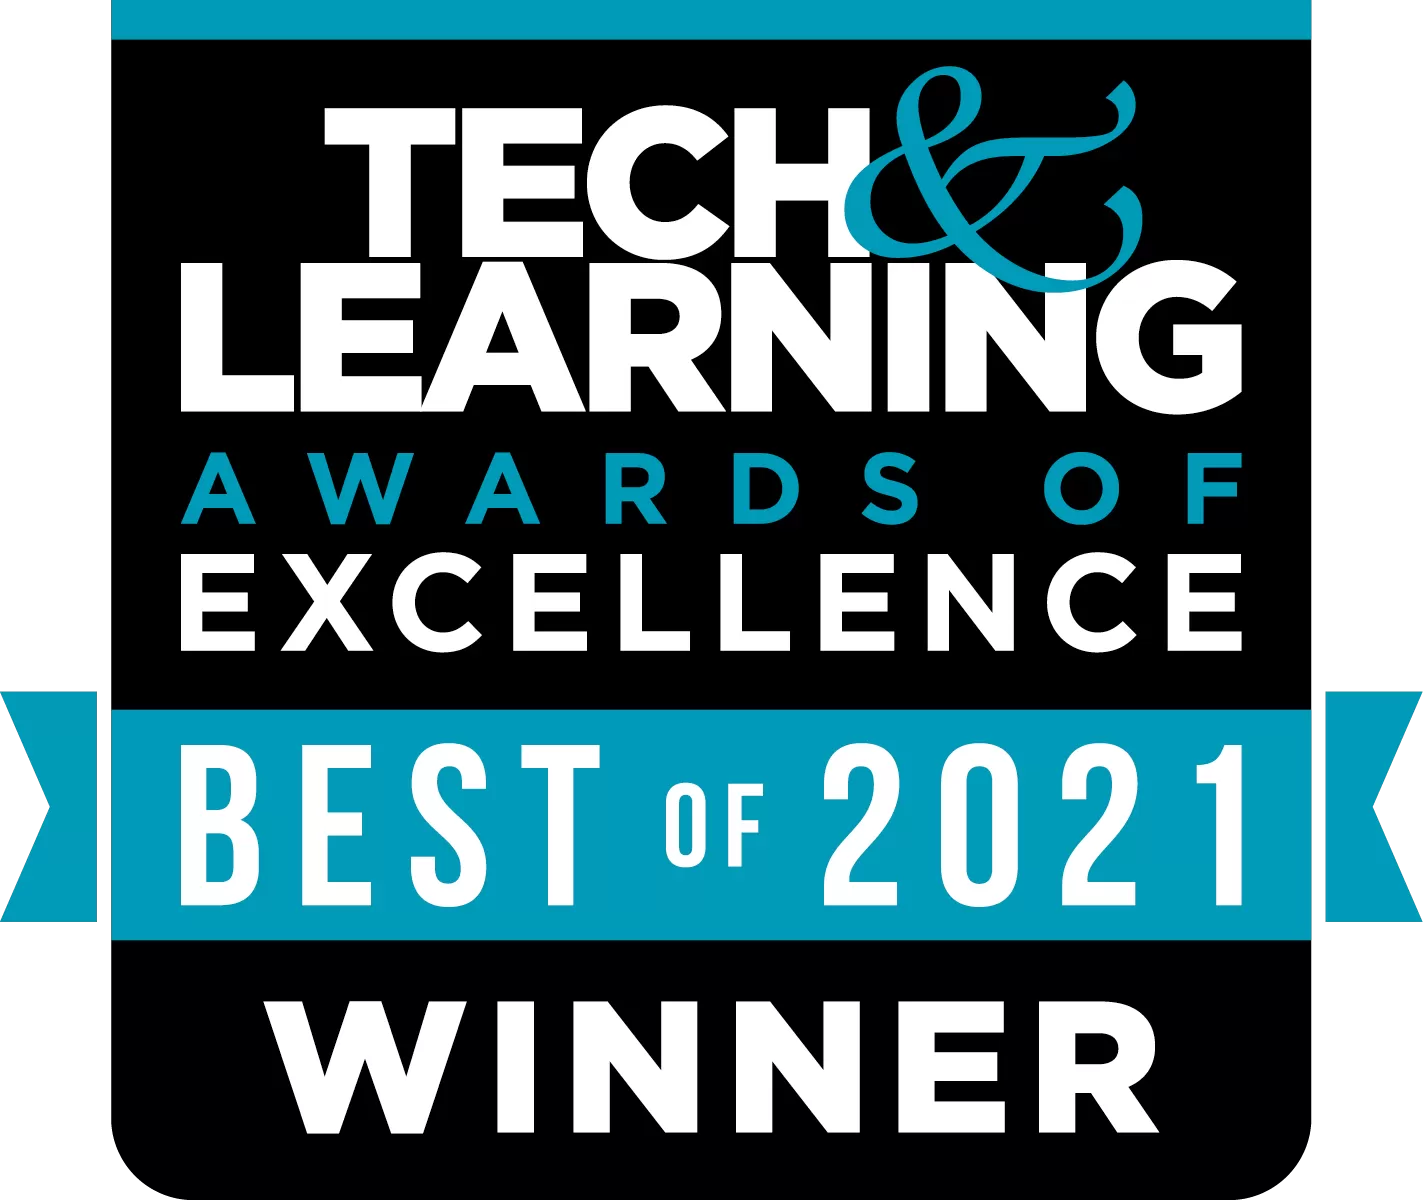 Teach & learning awards of excellence best of 2021 winner badge